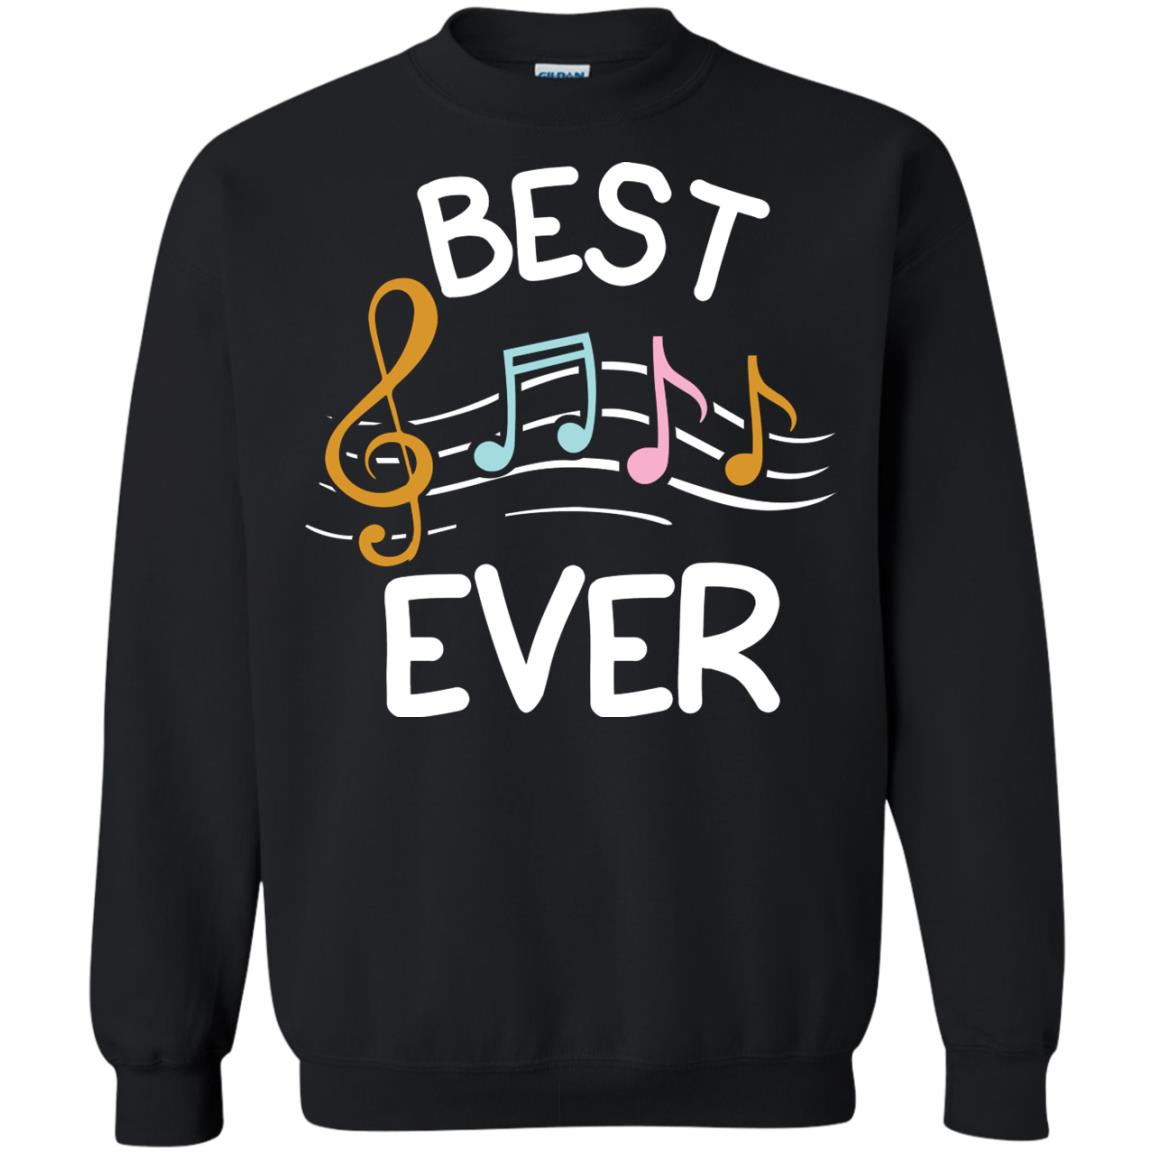 The Best Musical Of All Time Ever Music Lover ShirtG180 Gildan Crewneck Pullover Sweatshirt 8 oz.